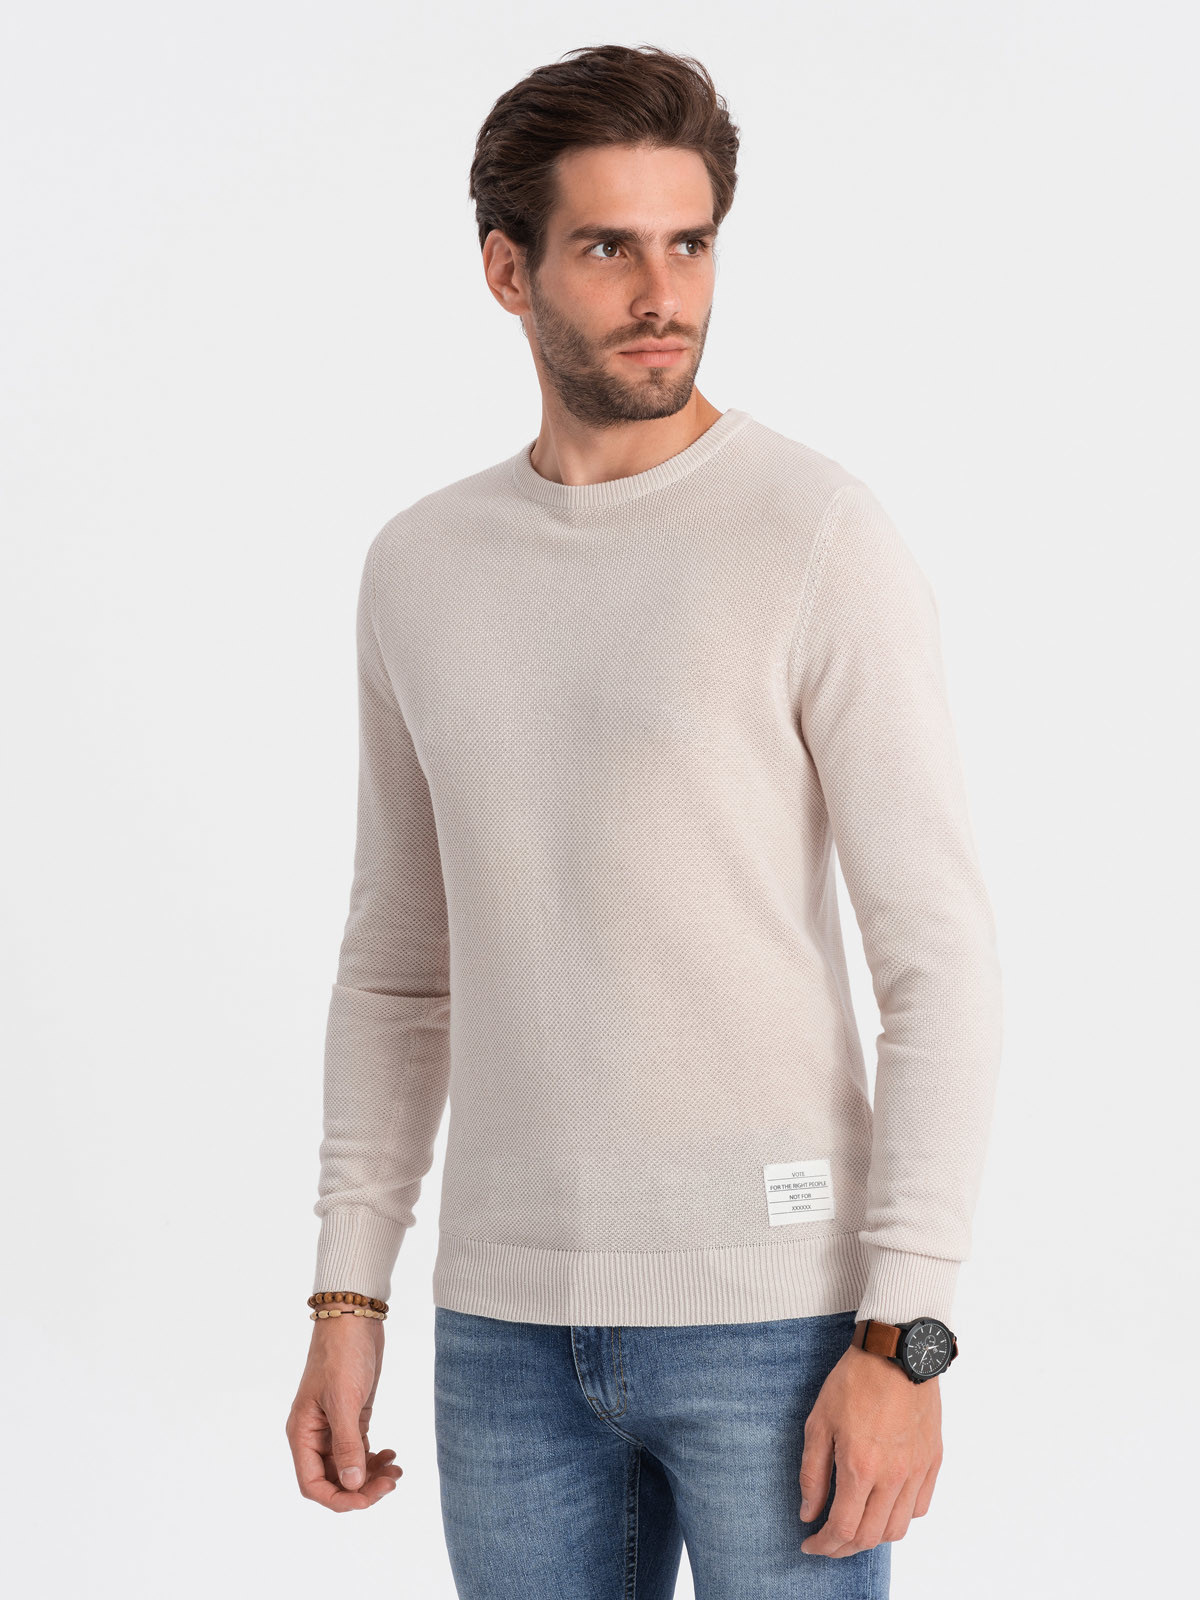 Men's textured sweater with half round neckline - beige V6 OM-SWSW V6 OM-SWSW - 0104